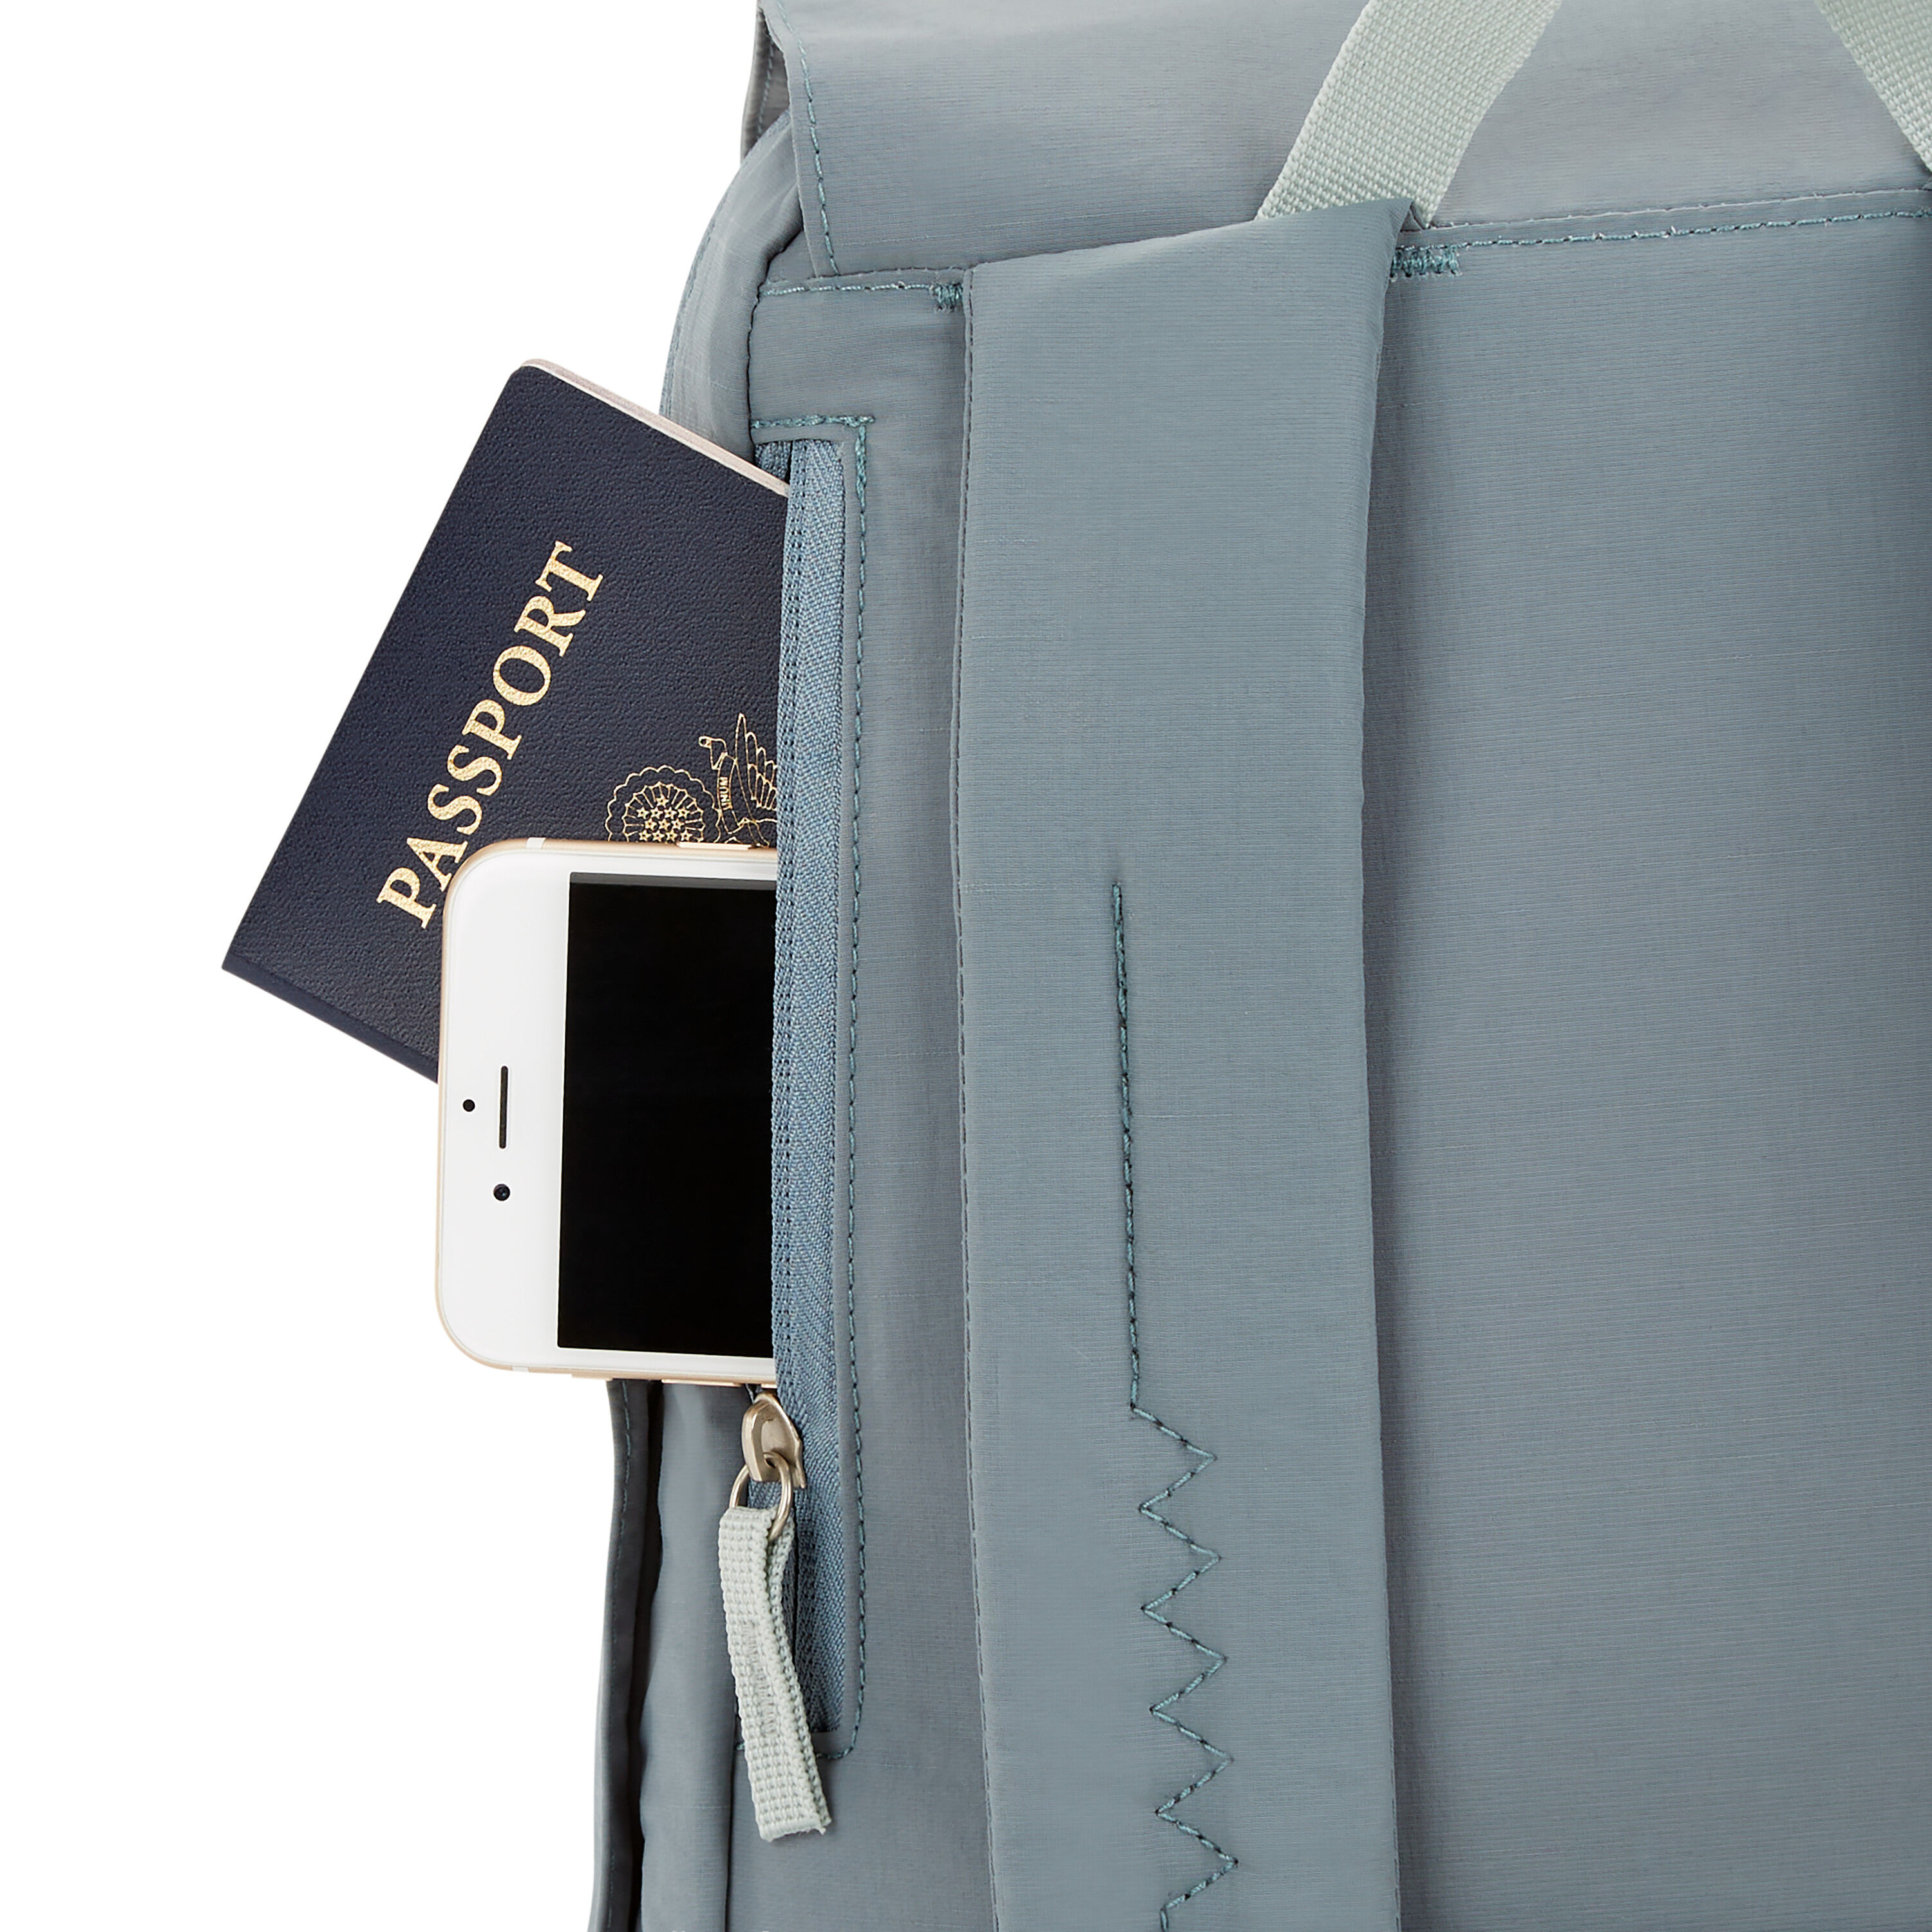 Buy Kiera Mini Backpack for USD 39.99